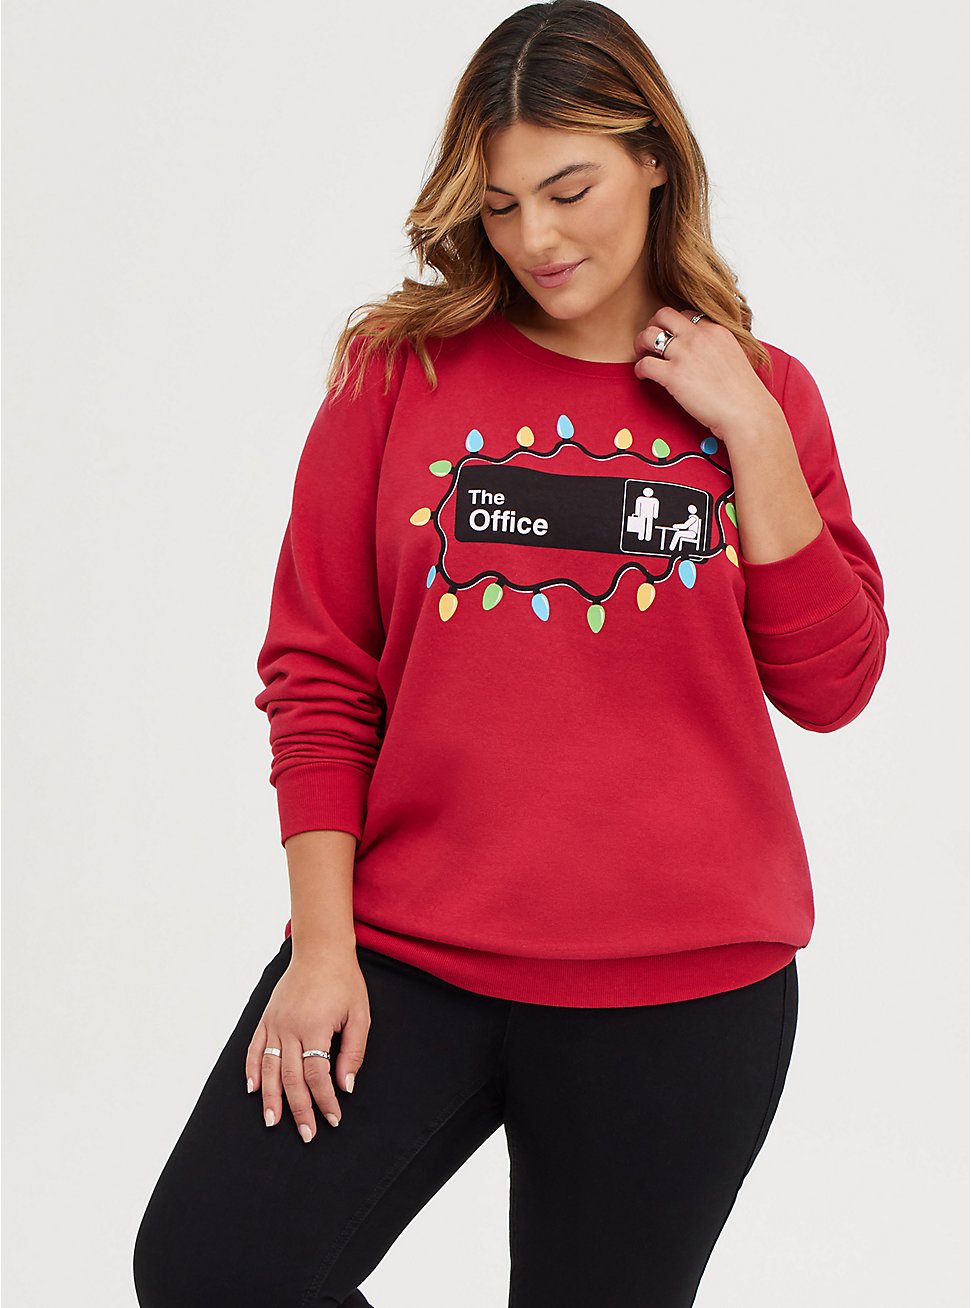 Sweatshirt - Cozy Fleece The Office Christmas Red, JESTER RED, hi-res